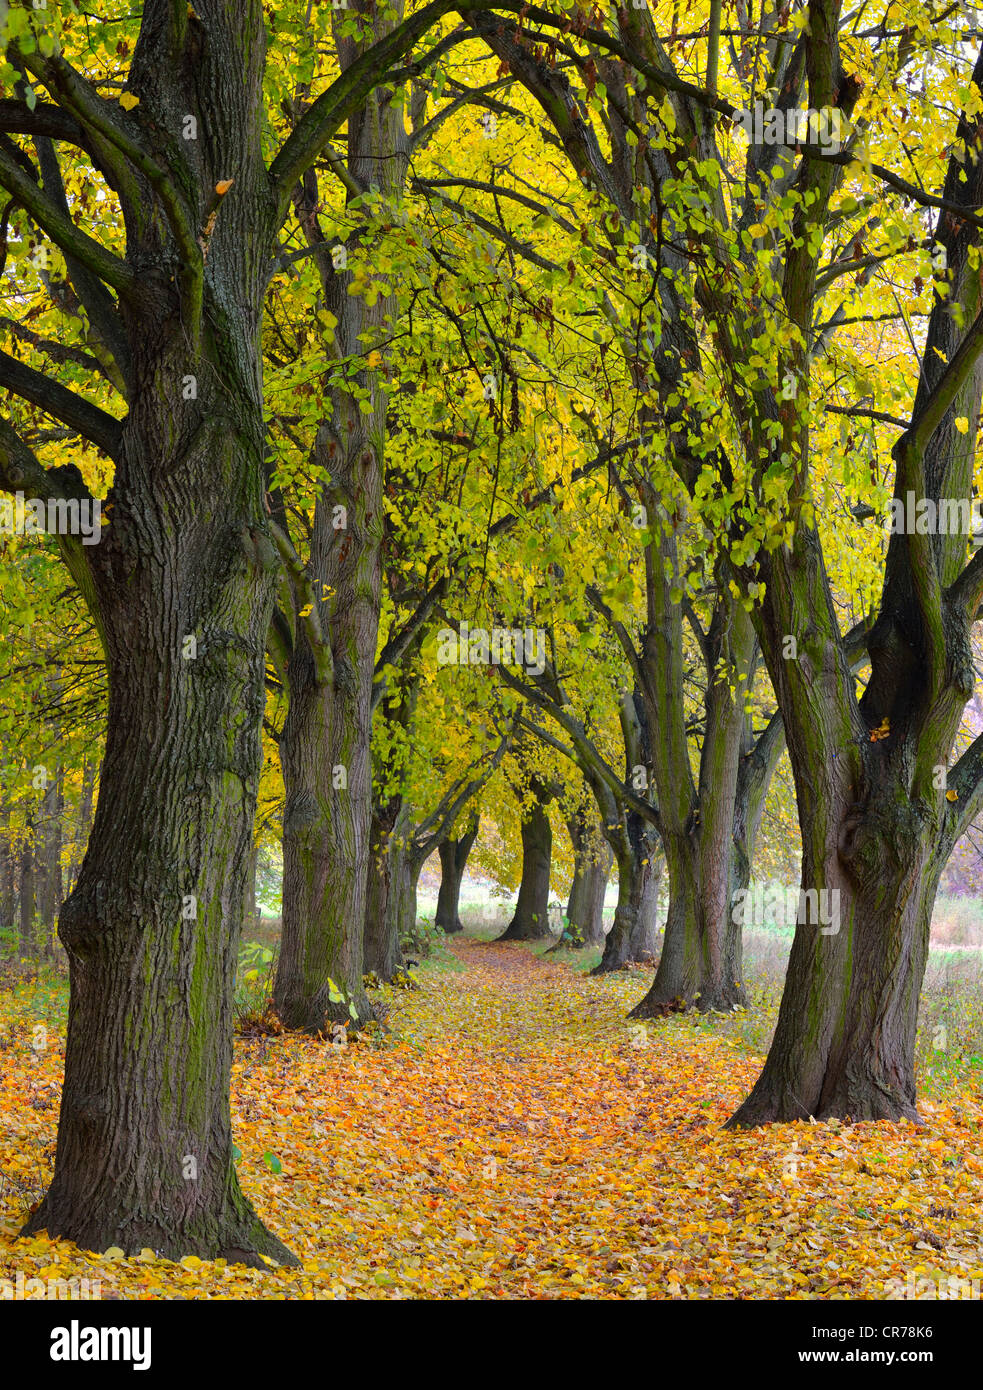 Poplar avenue with path in autumn, Black poplar (Populus nigra), Lower Franconia, Franconia, Bavaria, Germany, Europe Stock Photo